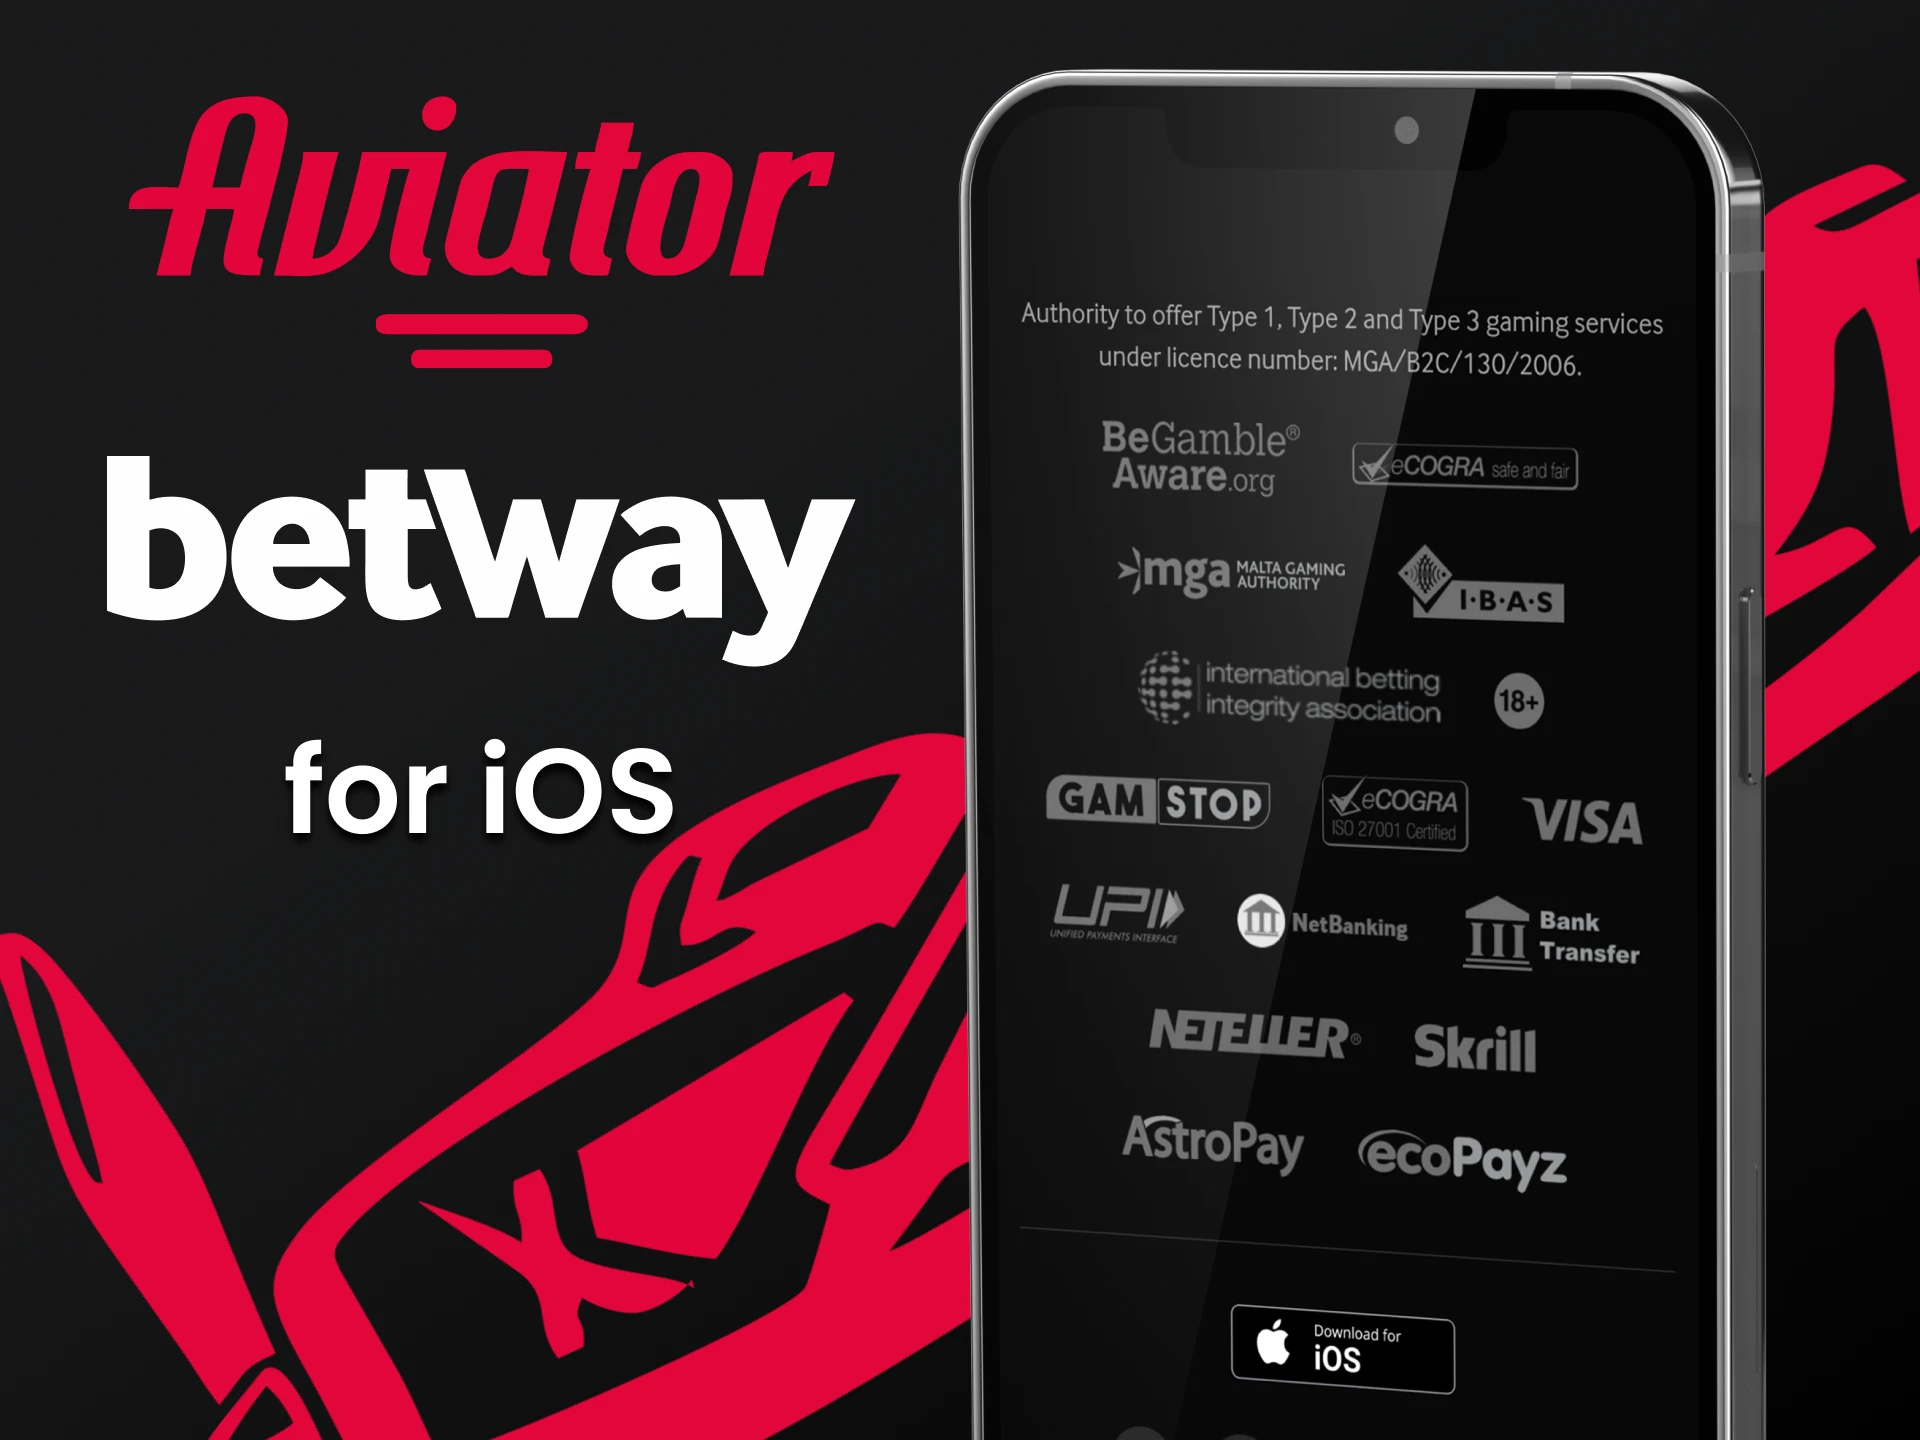 Play Aviator through the Betway iOS app.